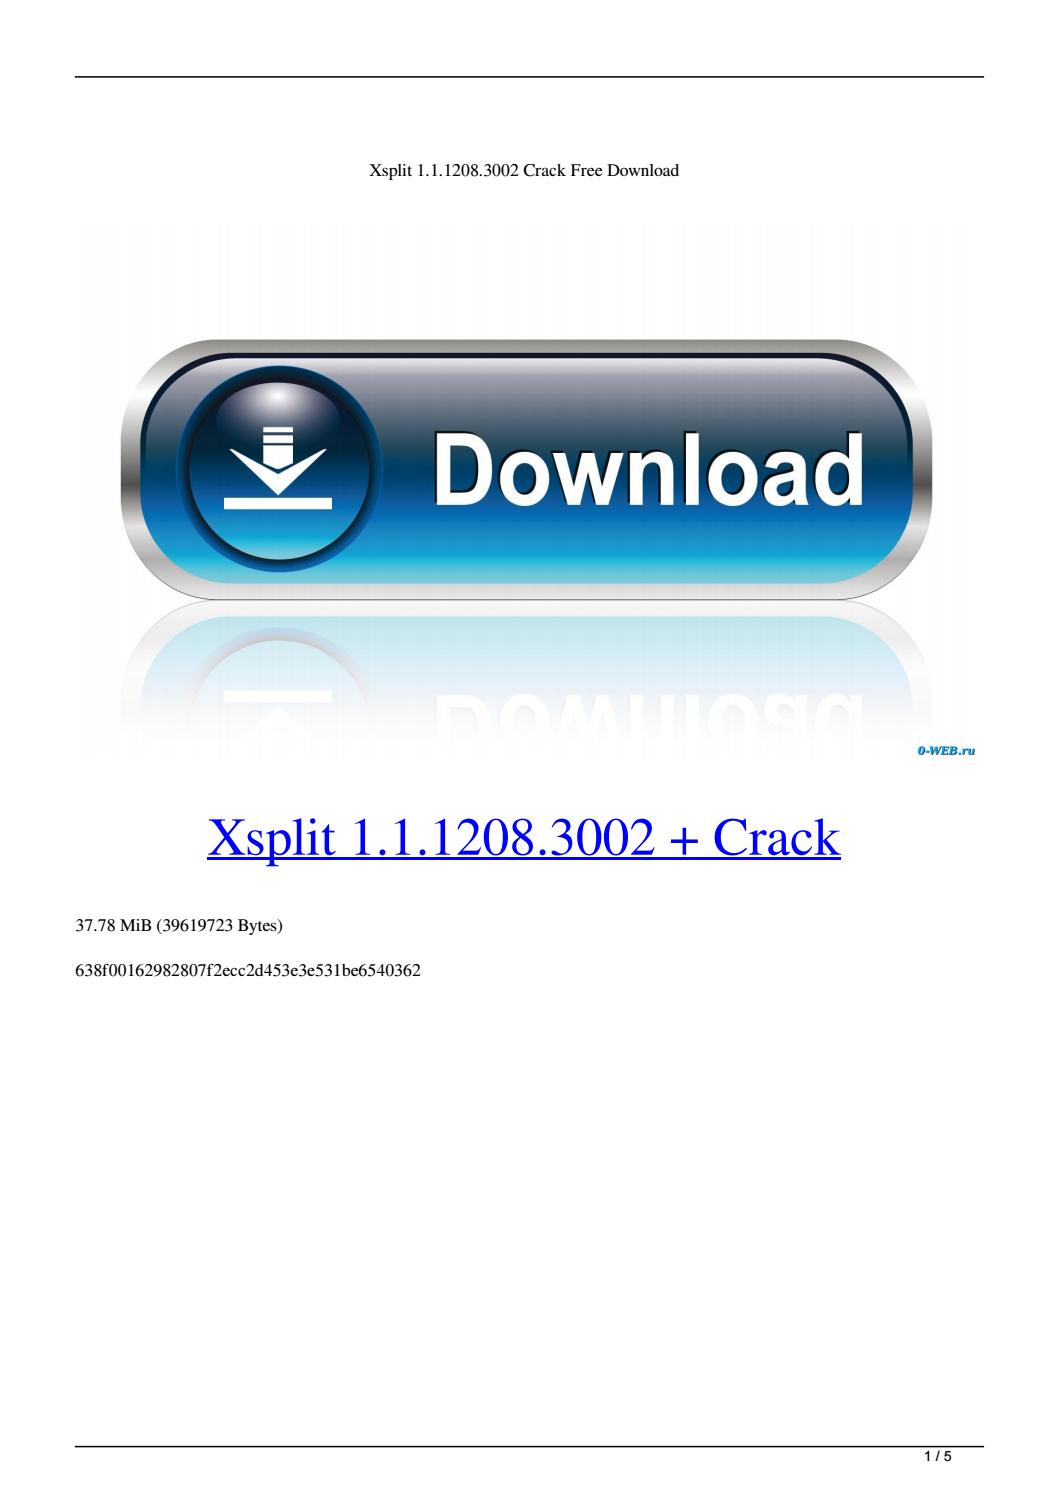 Xsplit broadcaster download 2017 free download